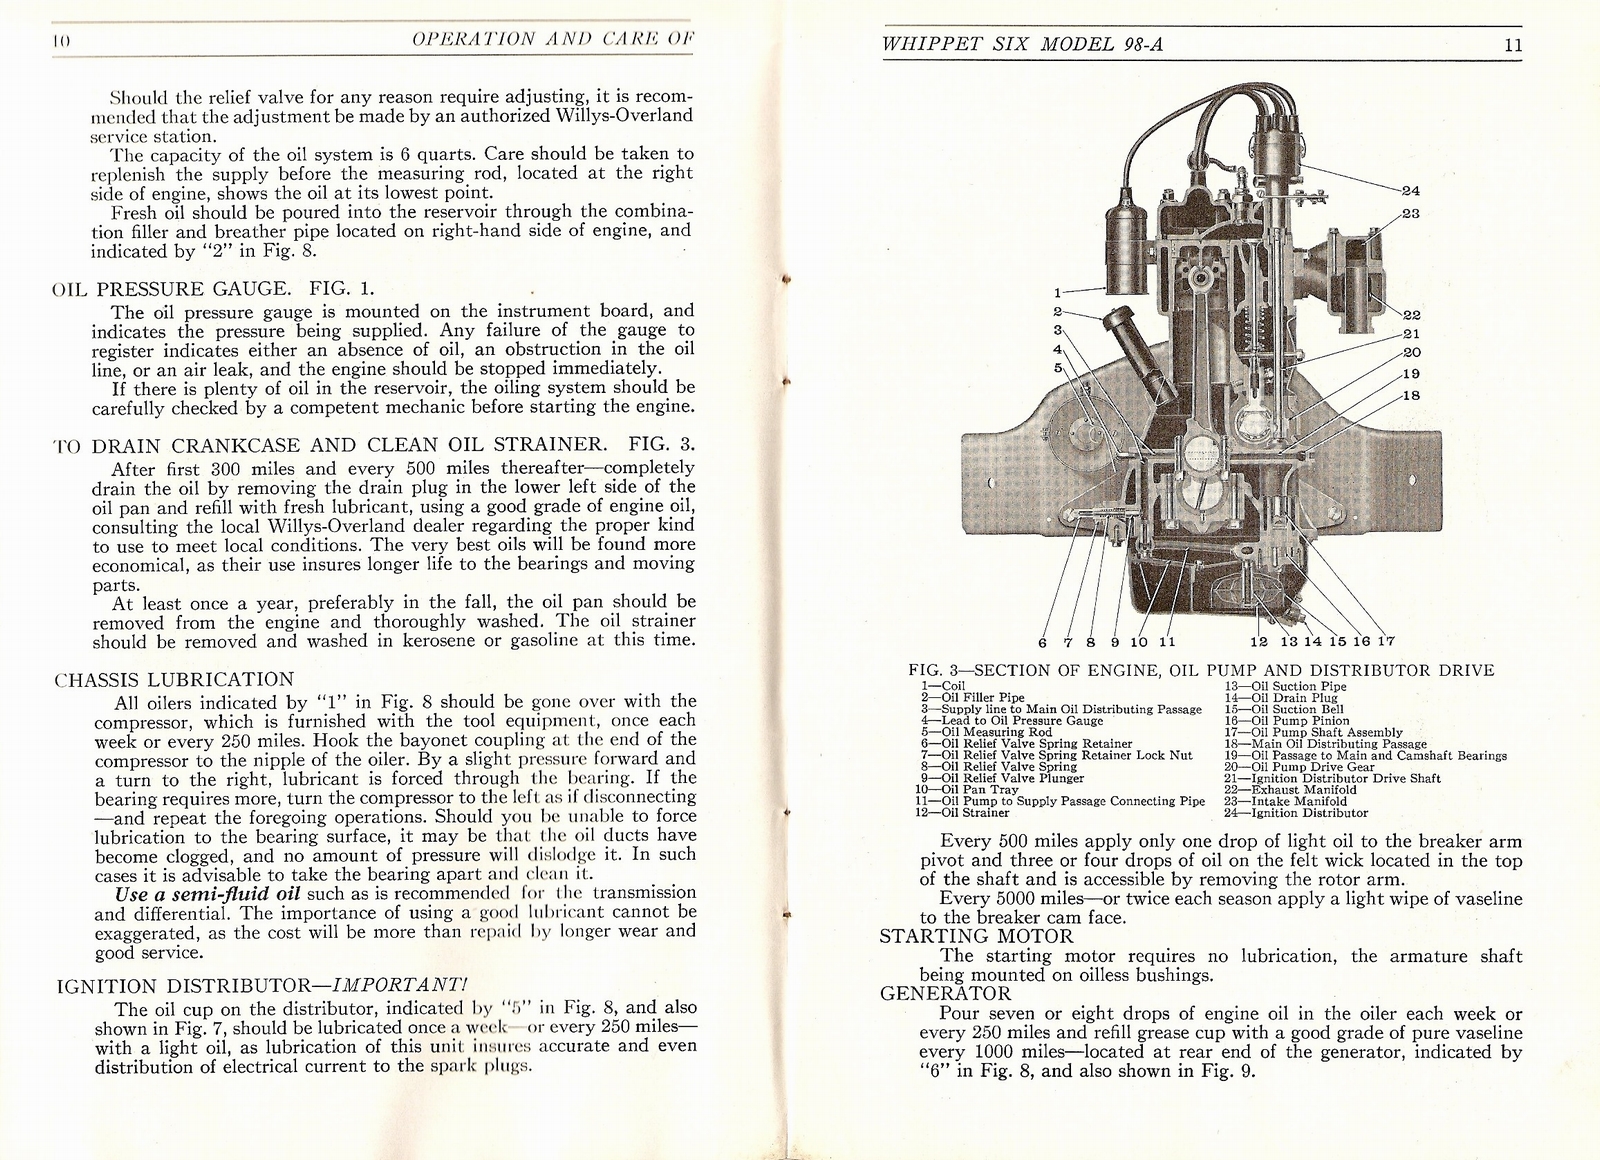 n_1929 Whippet Six Operation Manual-10-11.jpg